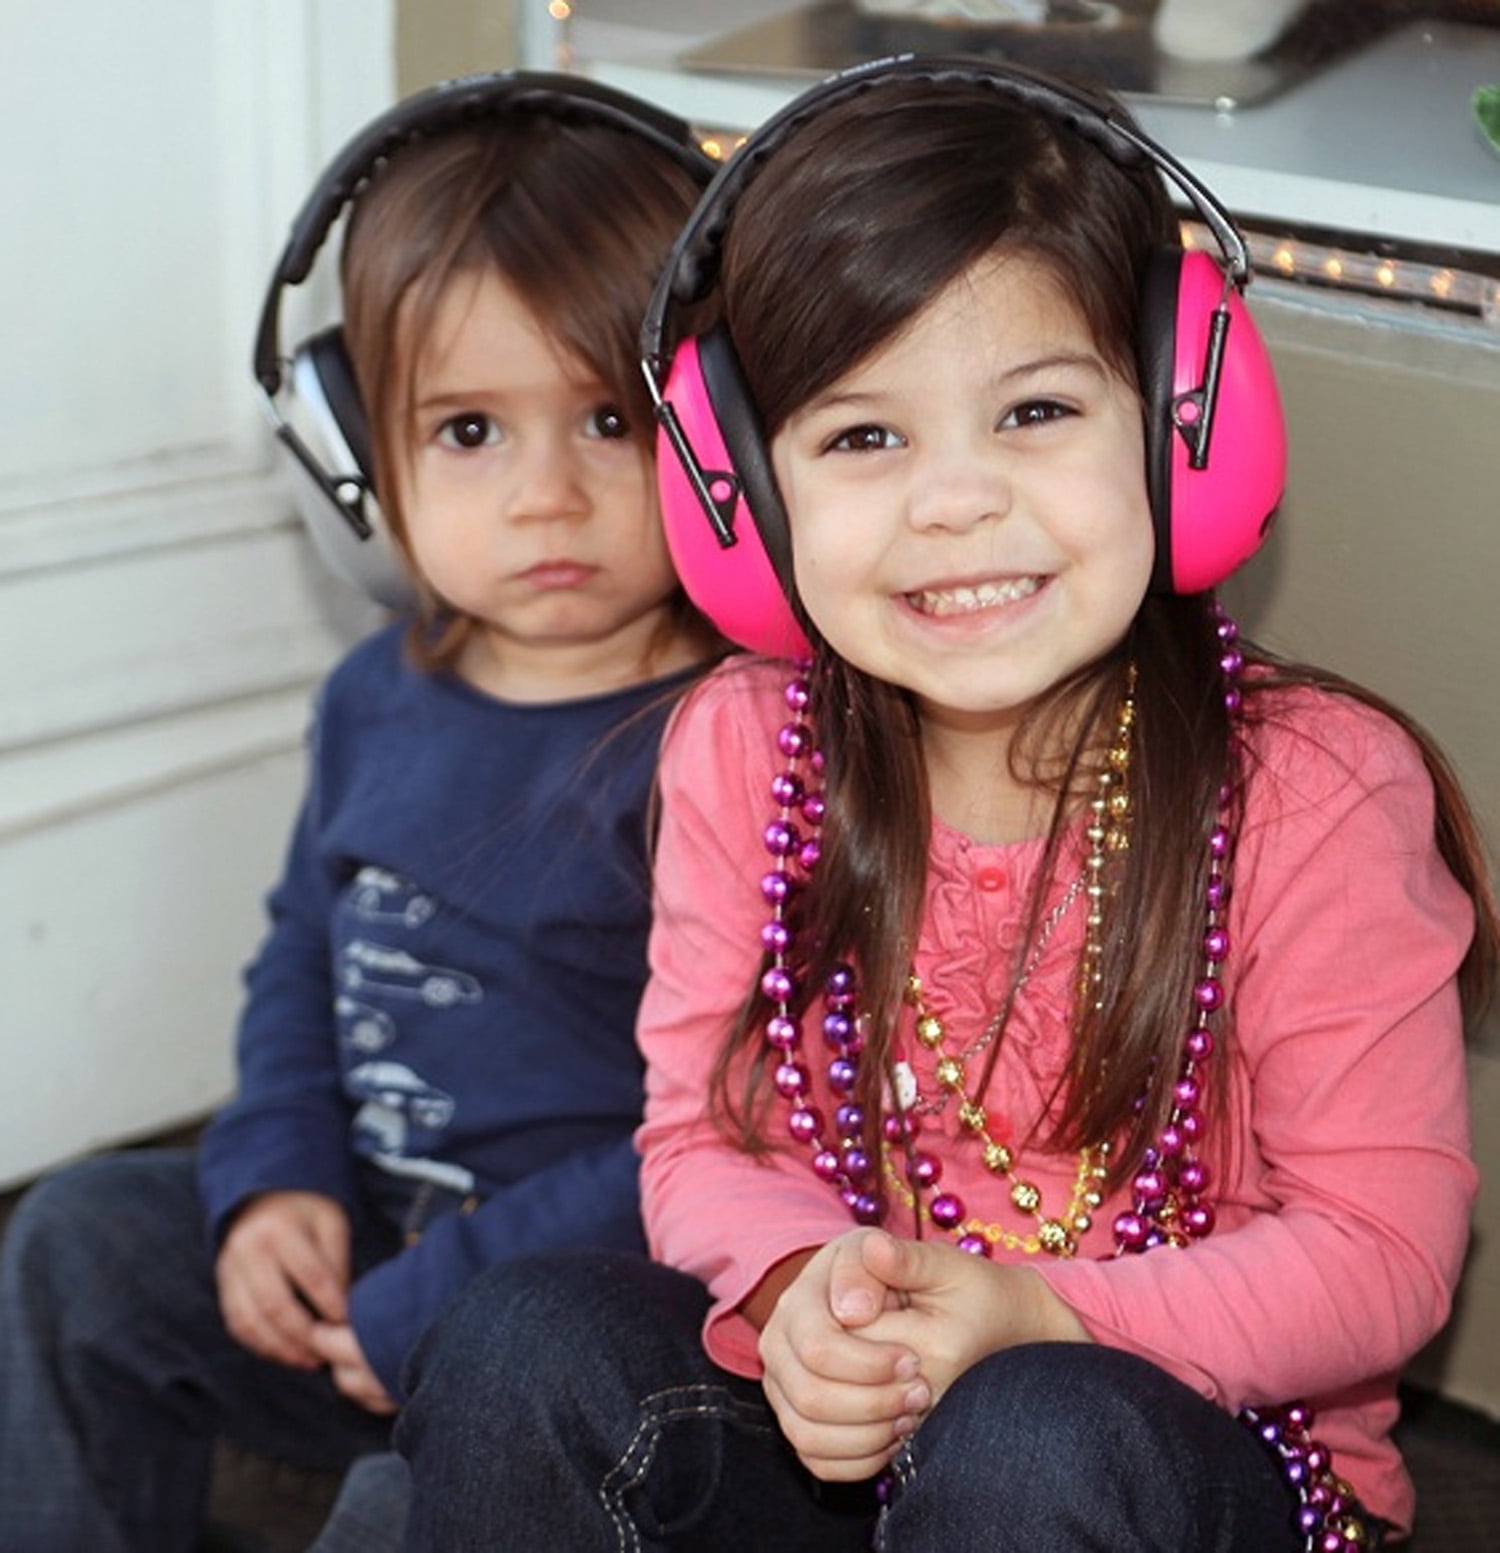 Ems for Kids : Casque Audio Enfant Bluetooth